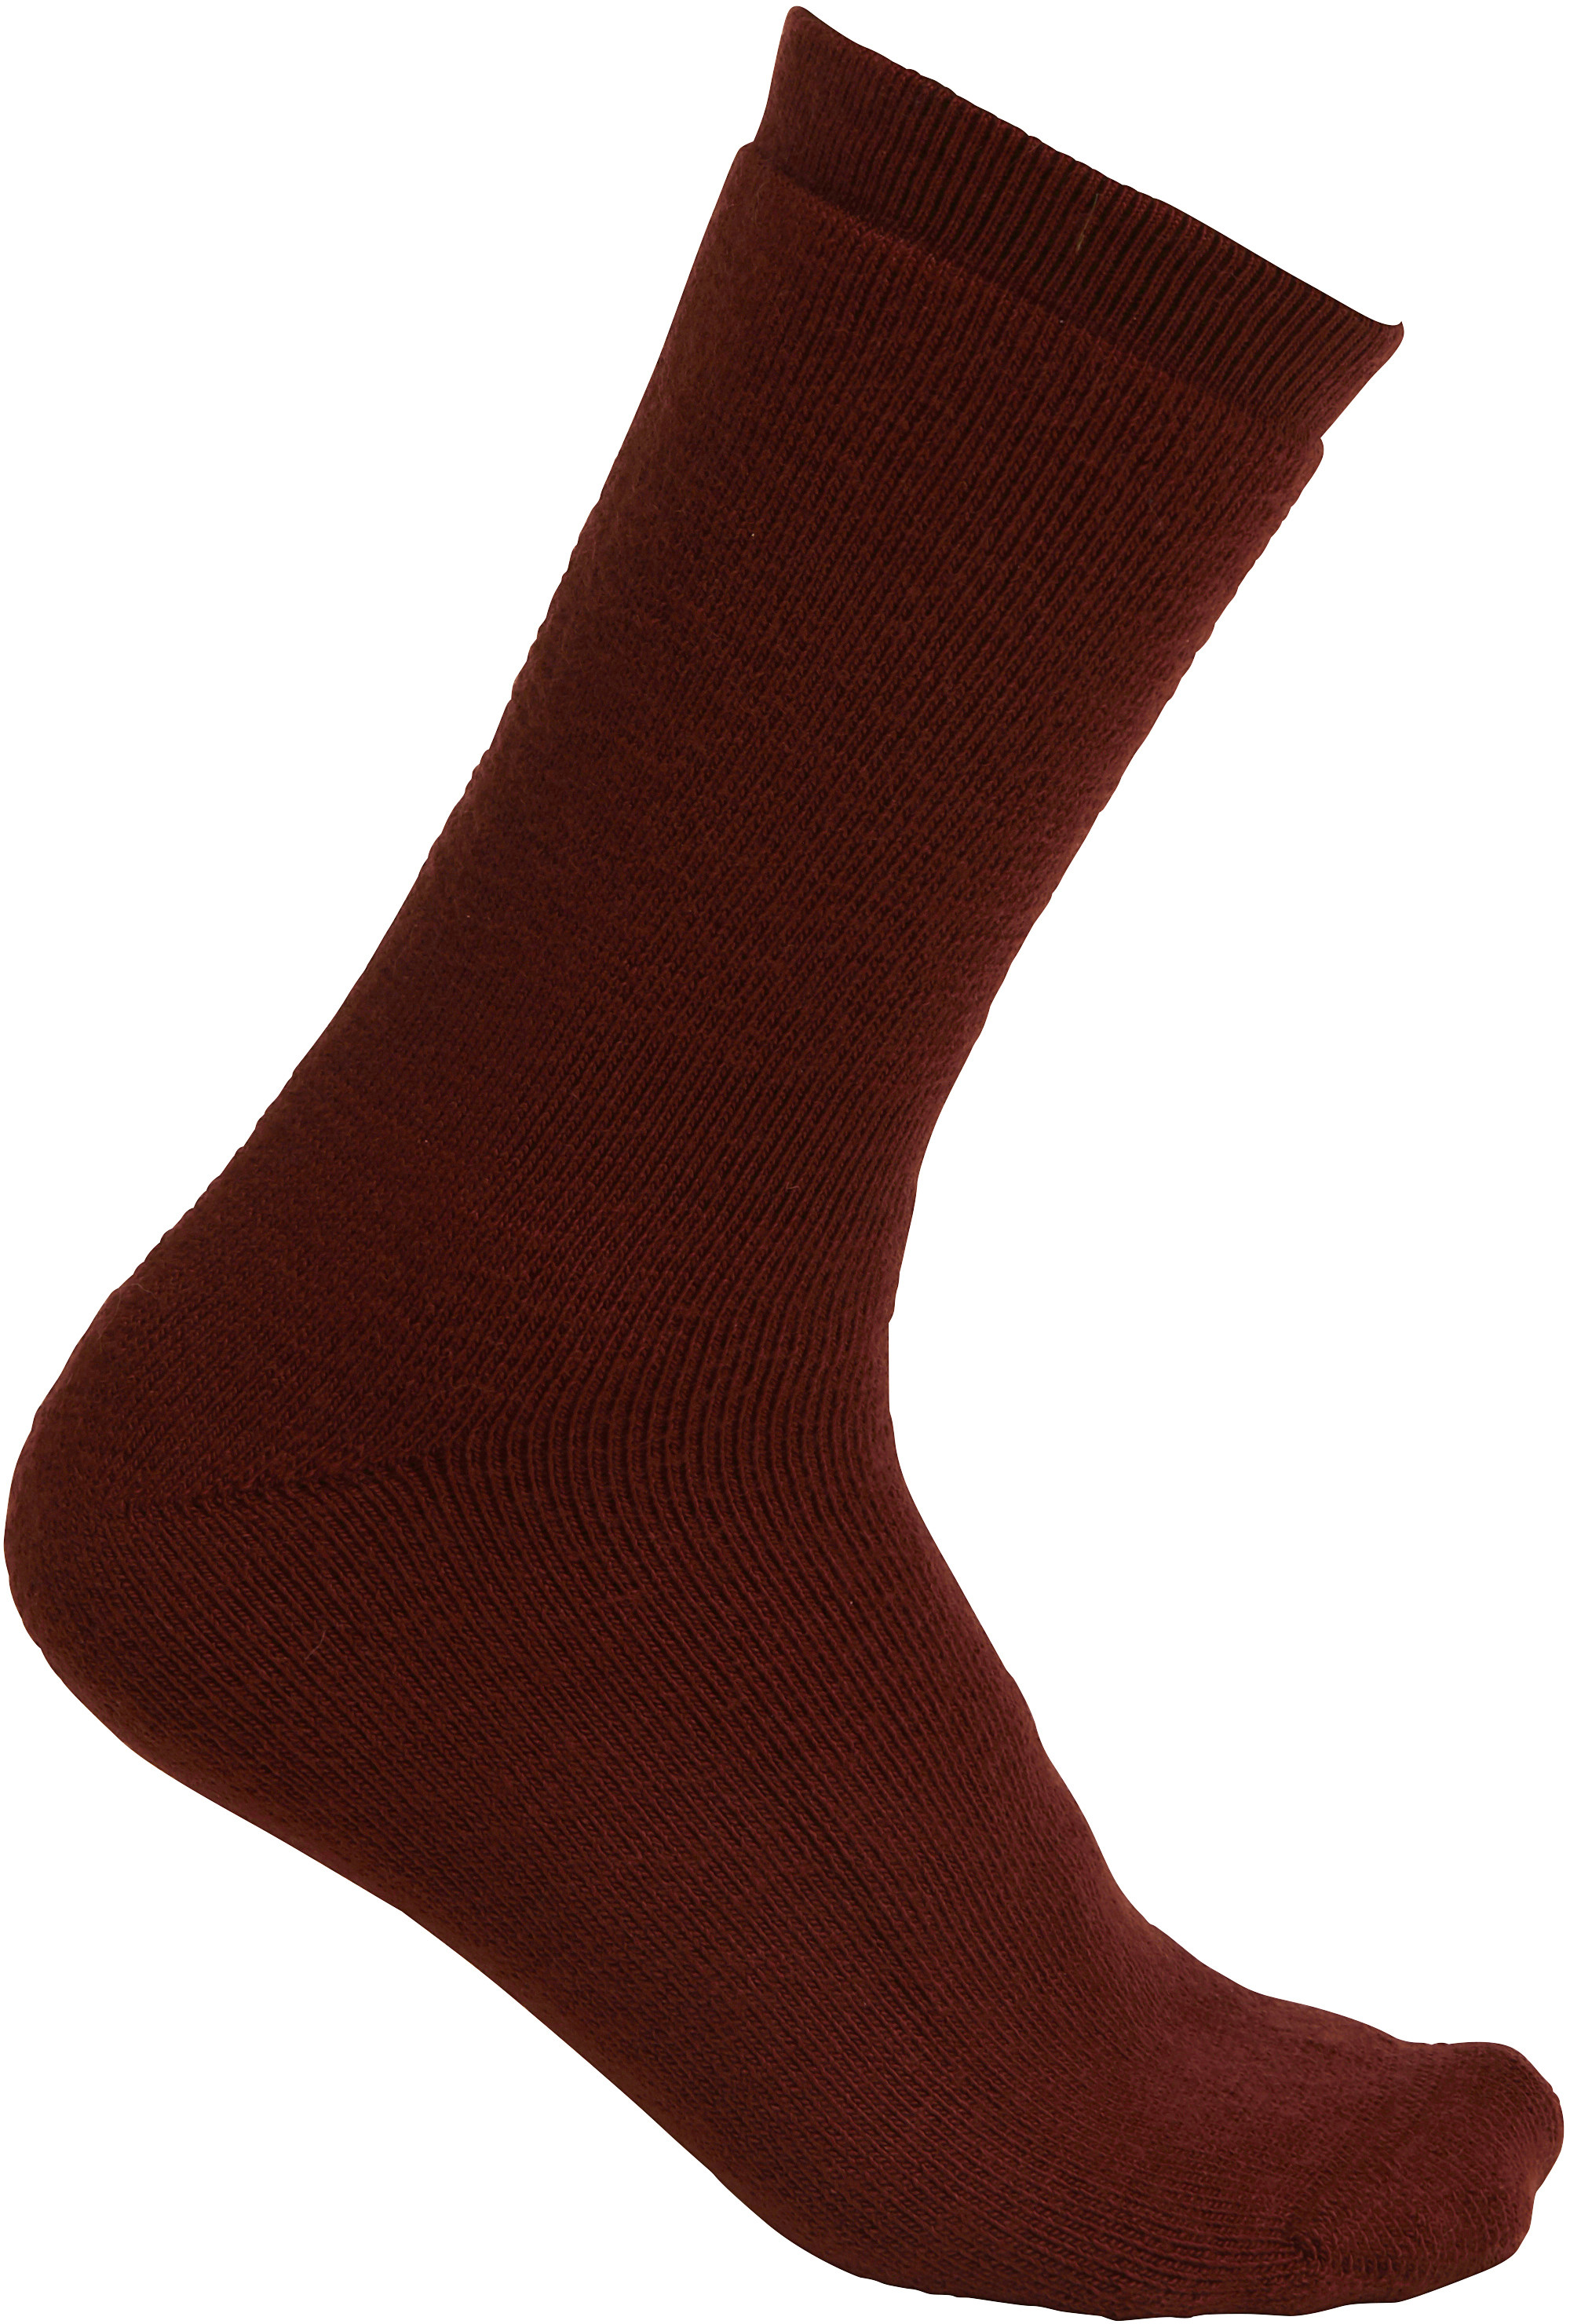 Socks 400 - Rust Red